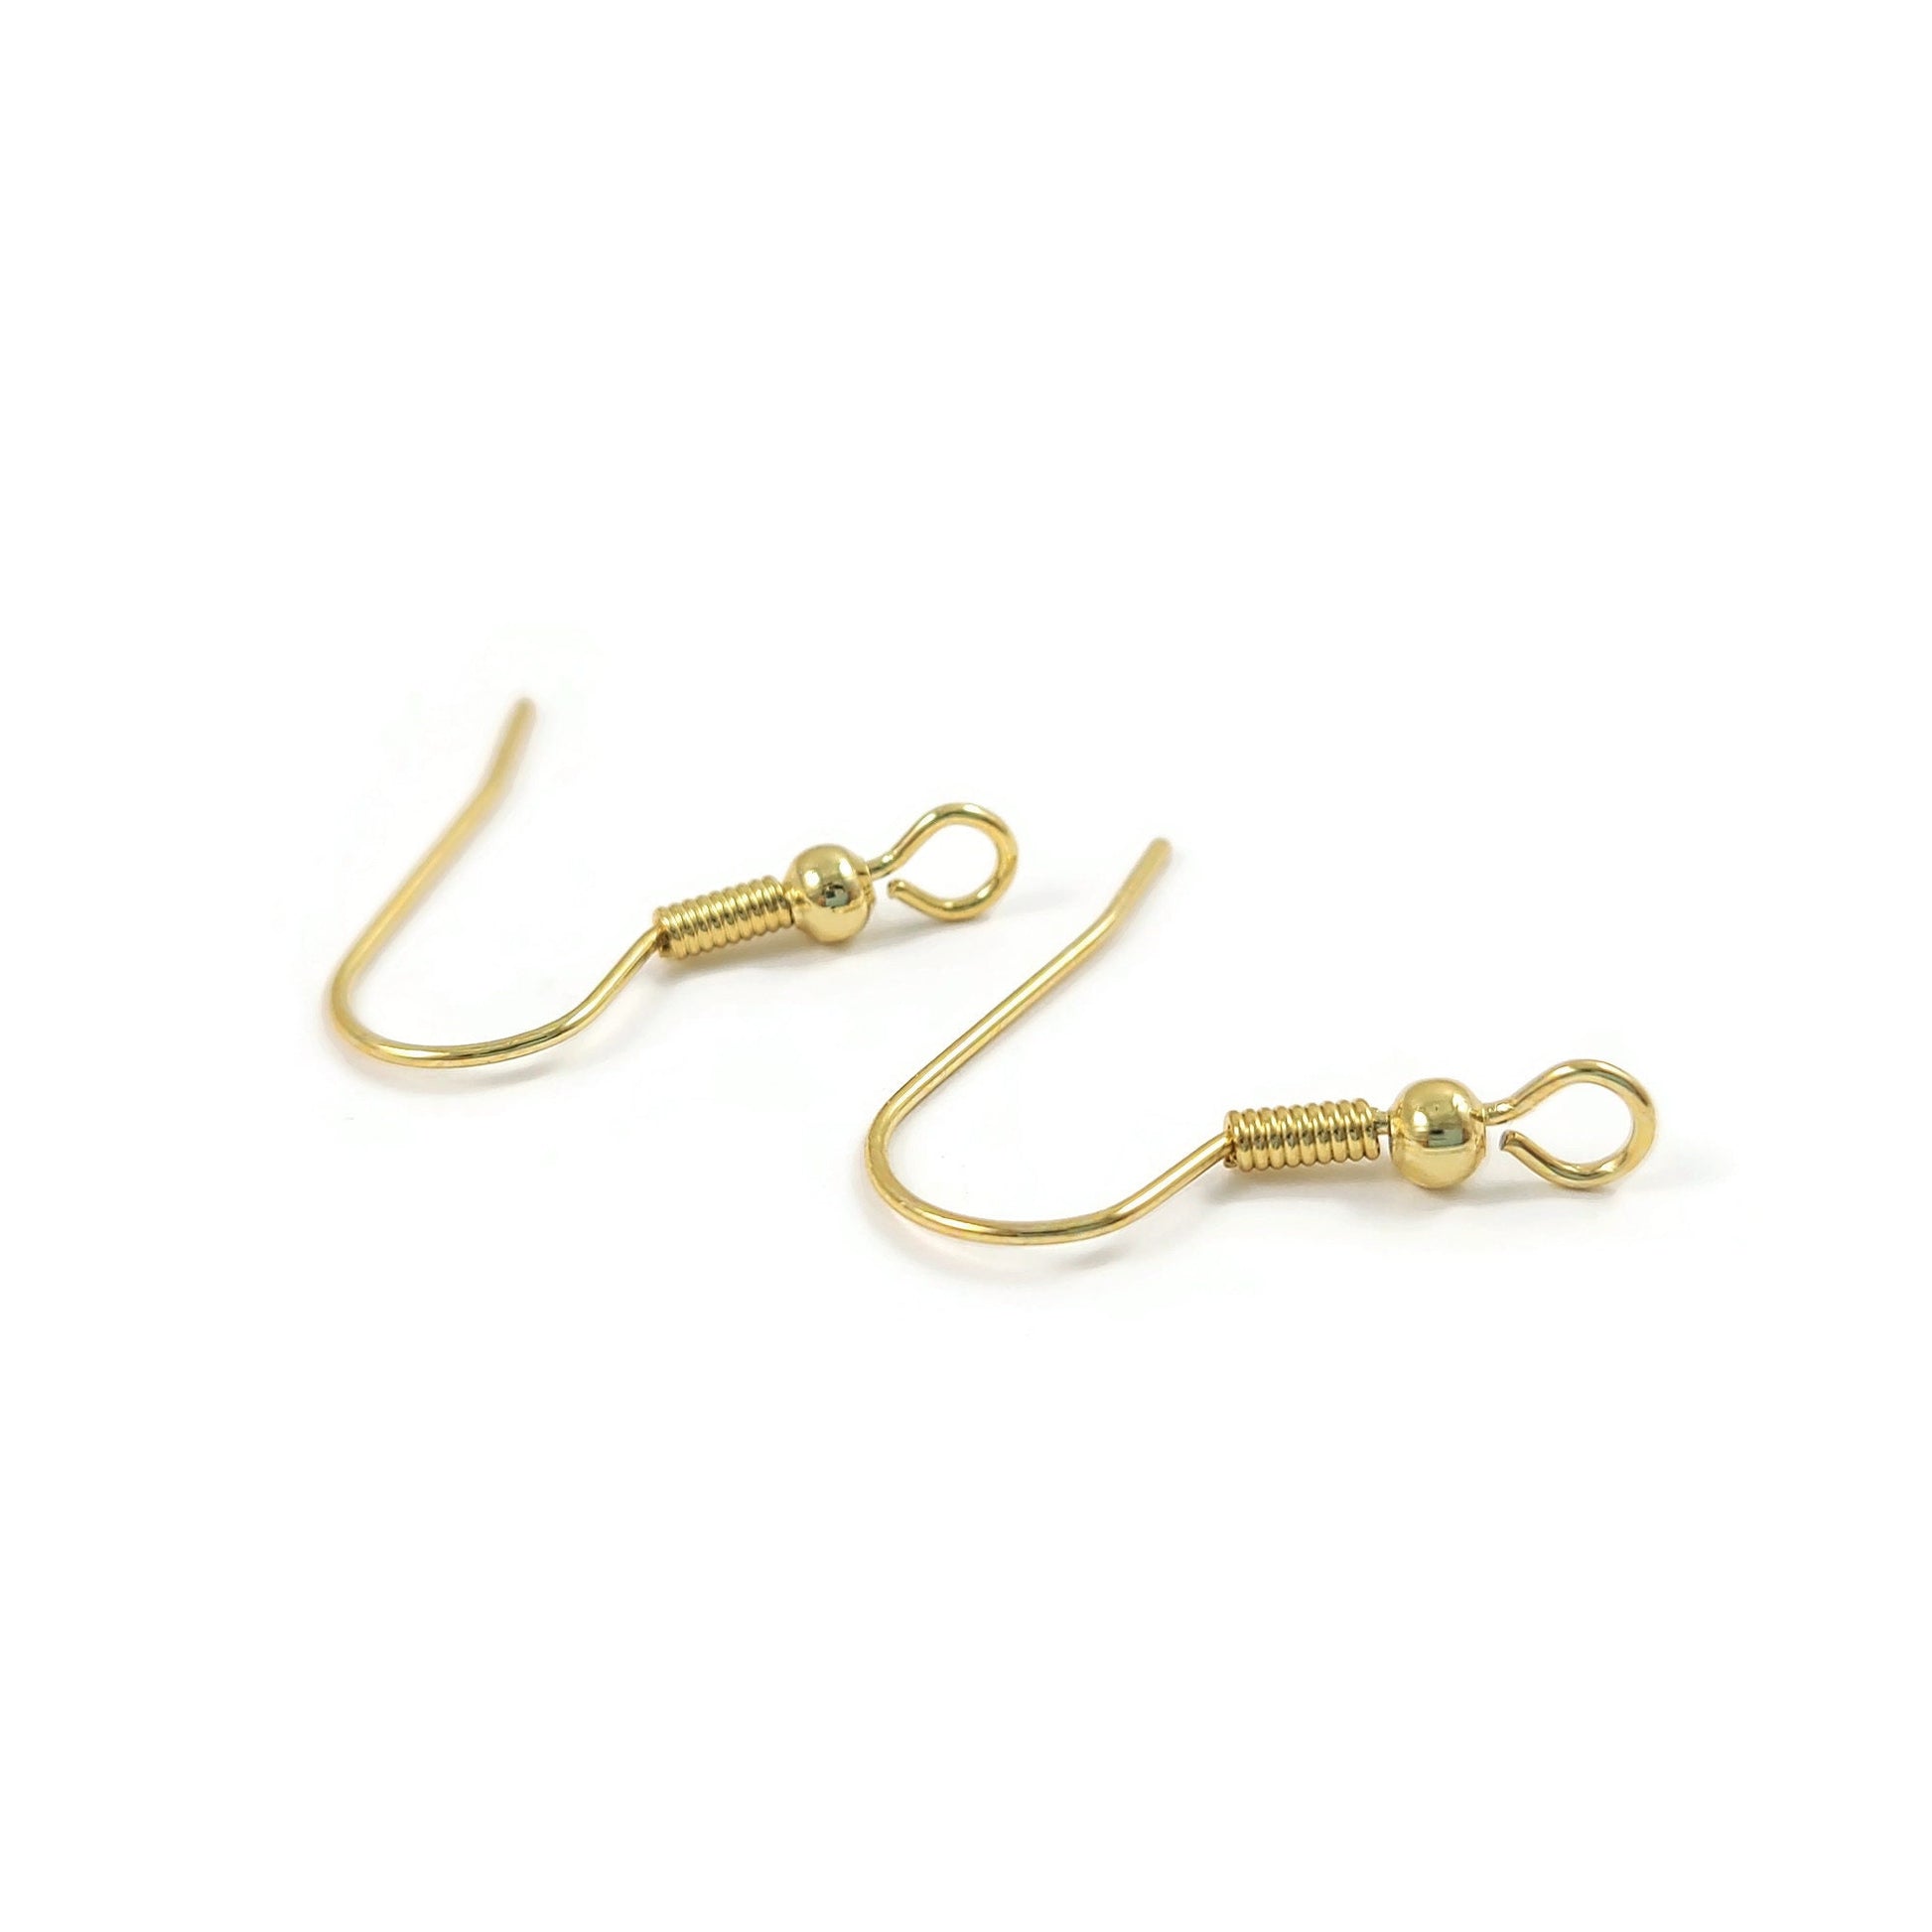 Hypoallergenic earring hooks, Nickel free 18K gold plated ear wire, Front loop